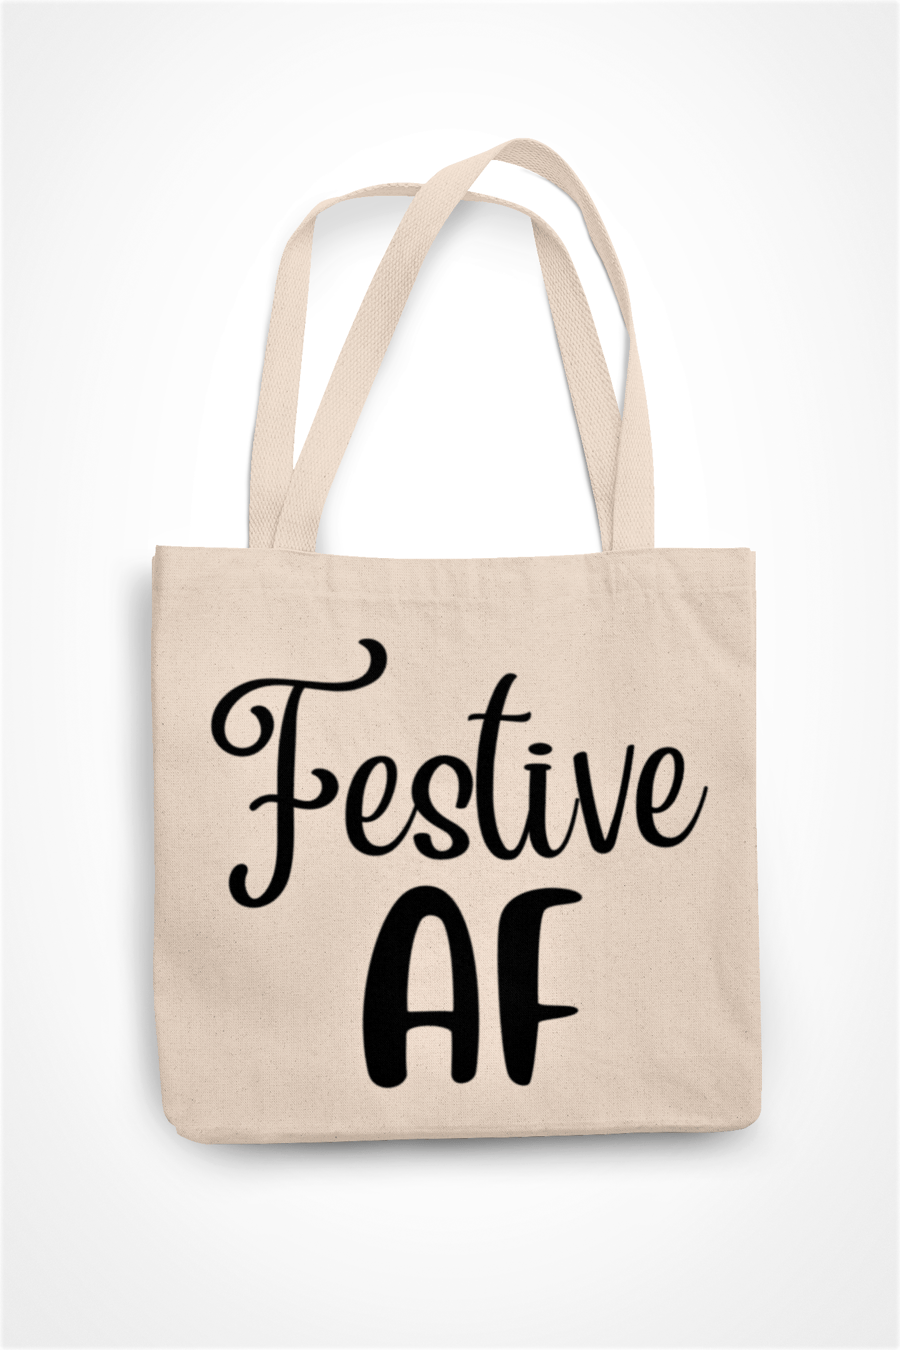 Festive A F   - Novelty Funny Christmas Tote Bag - Shopper Bag